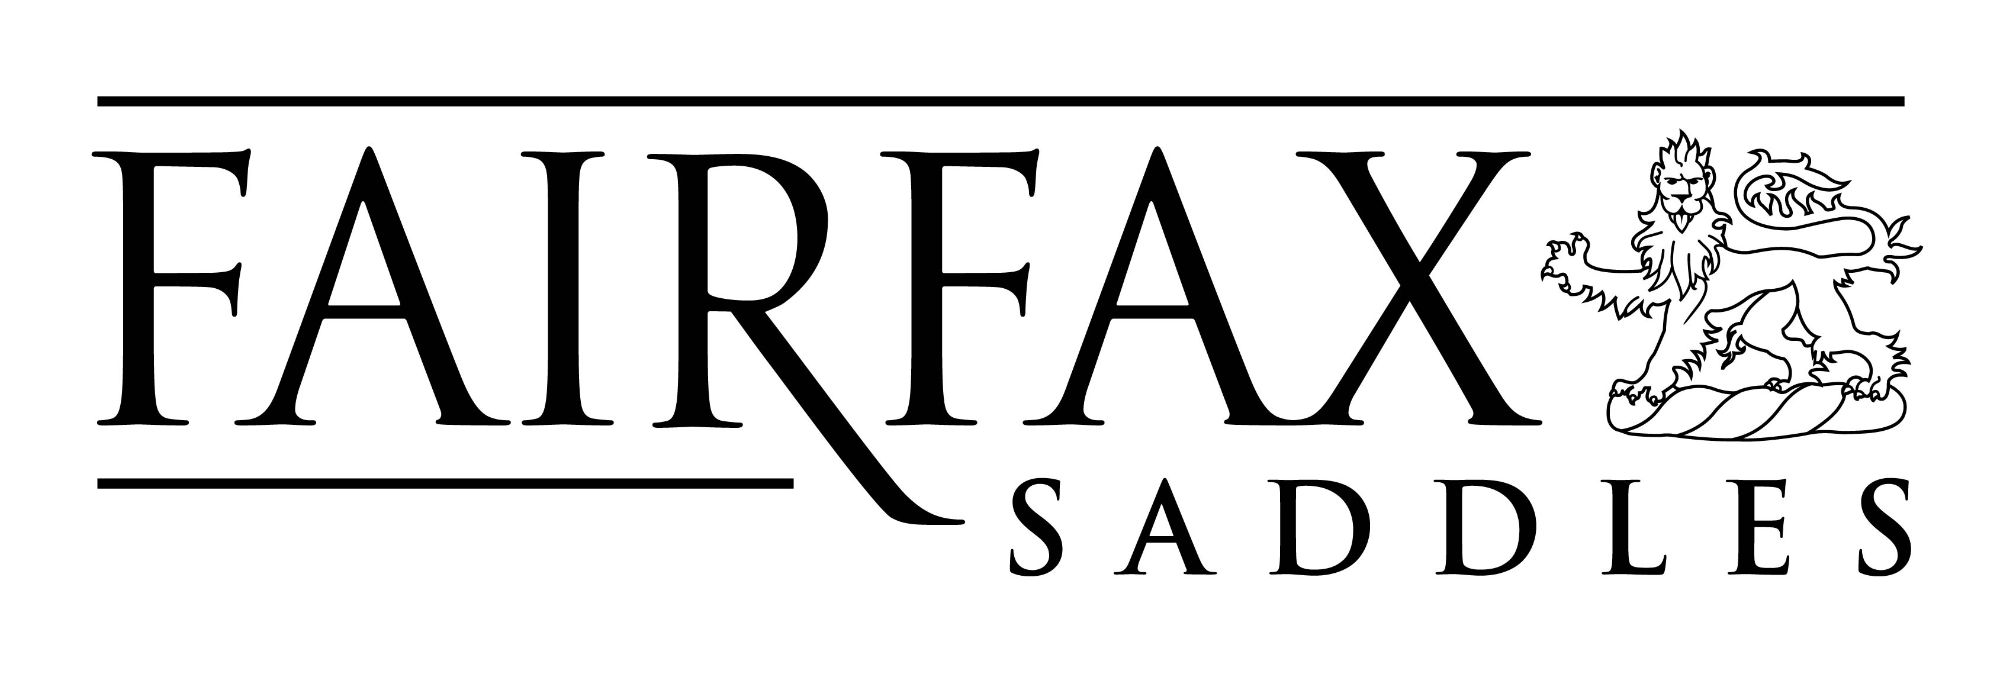 Fairfax Saddles